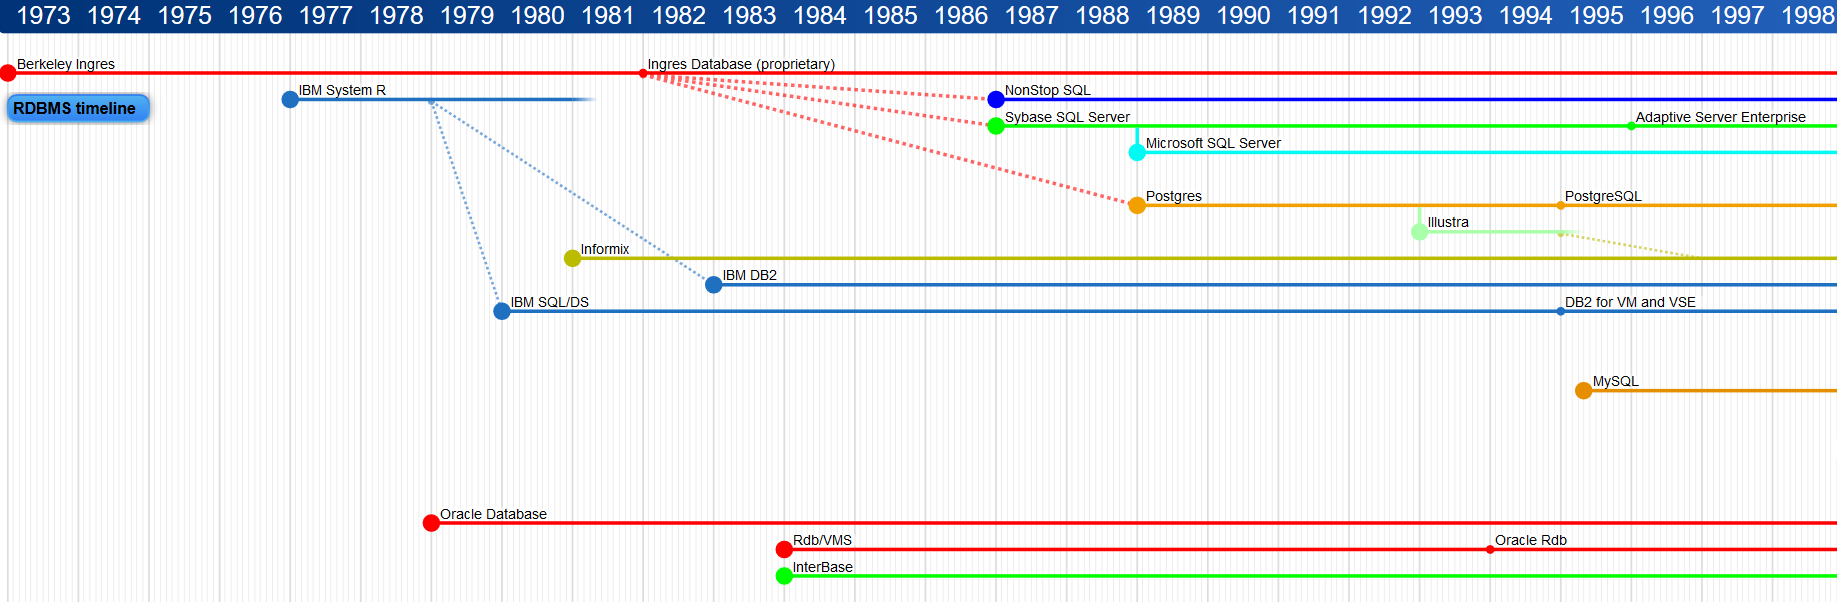 Timeline of databases